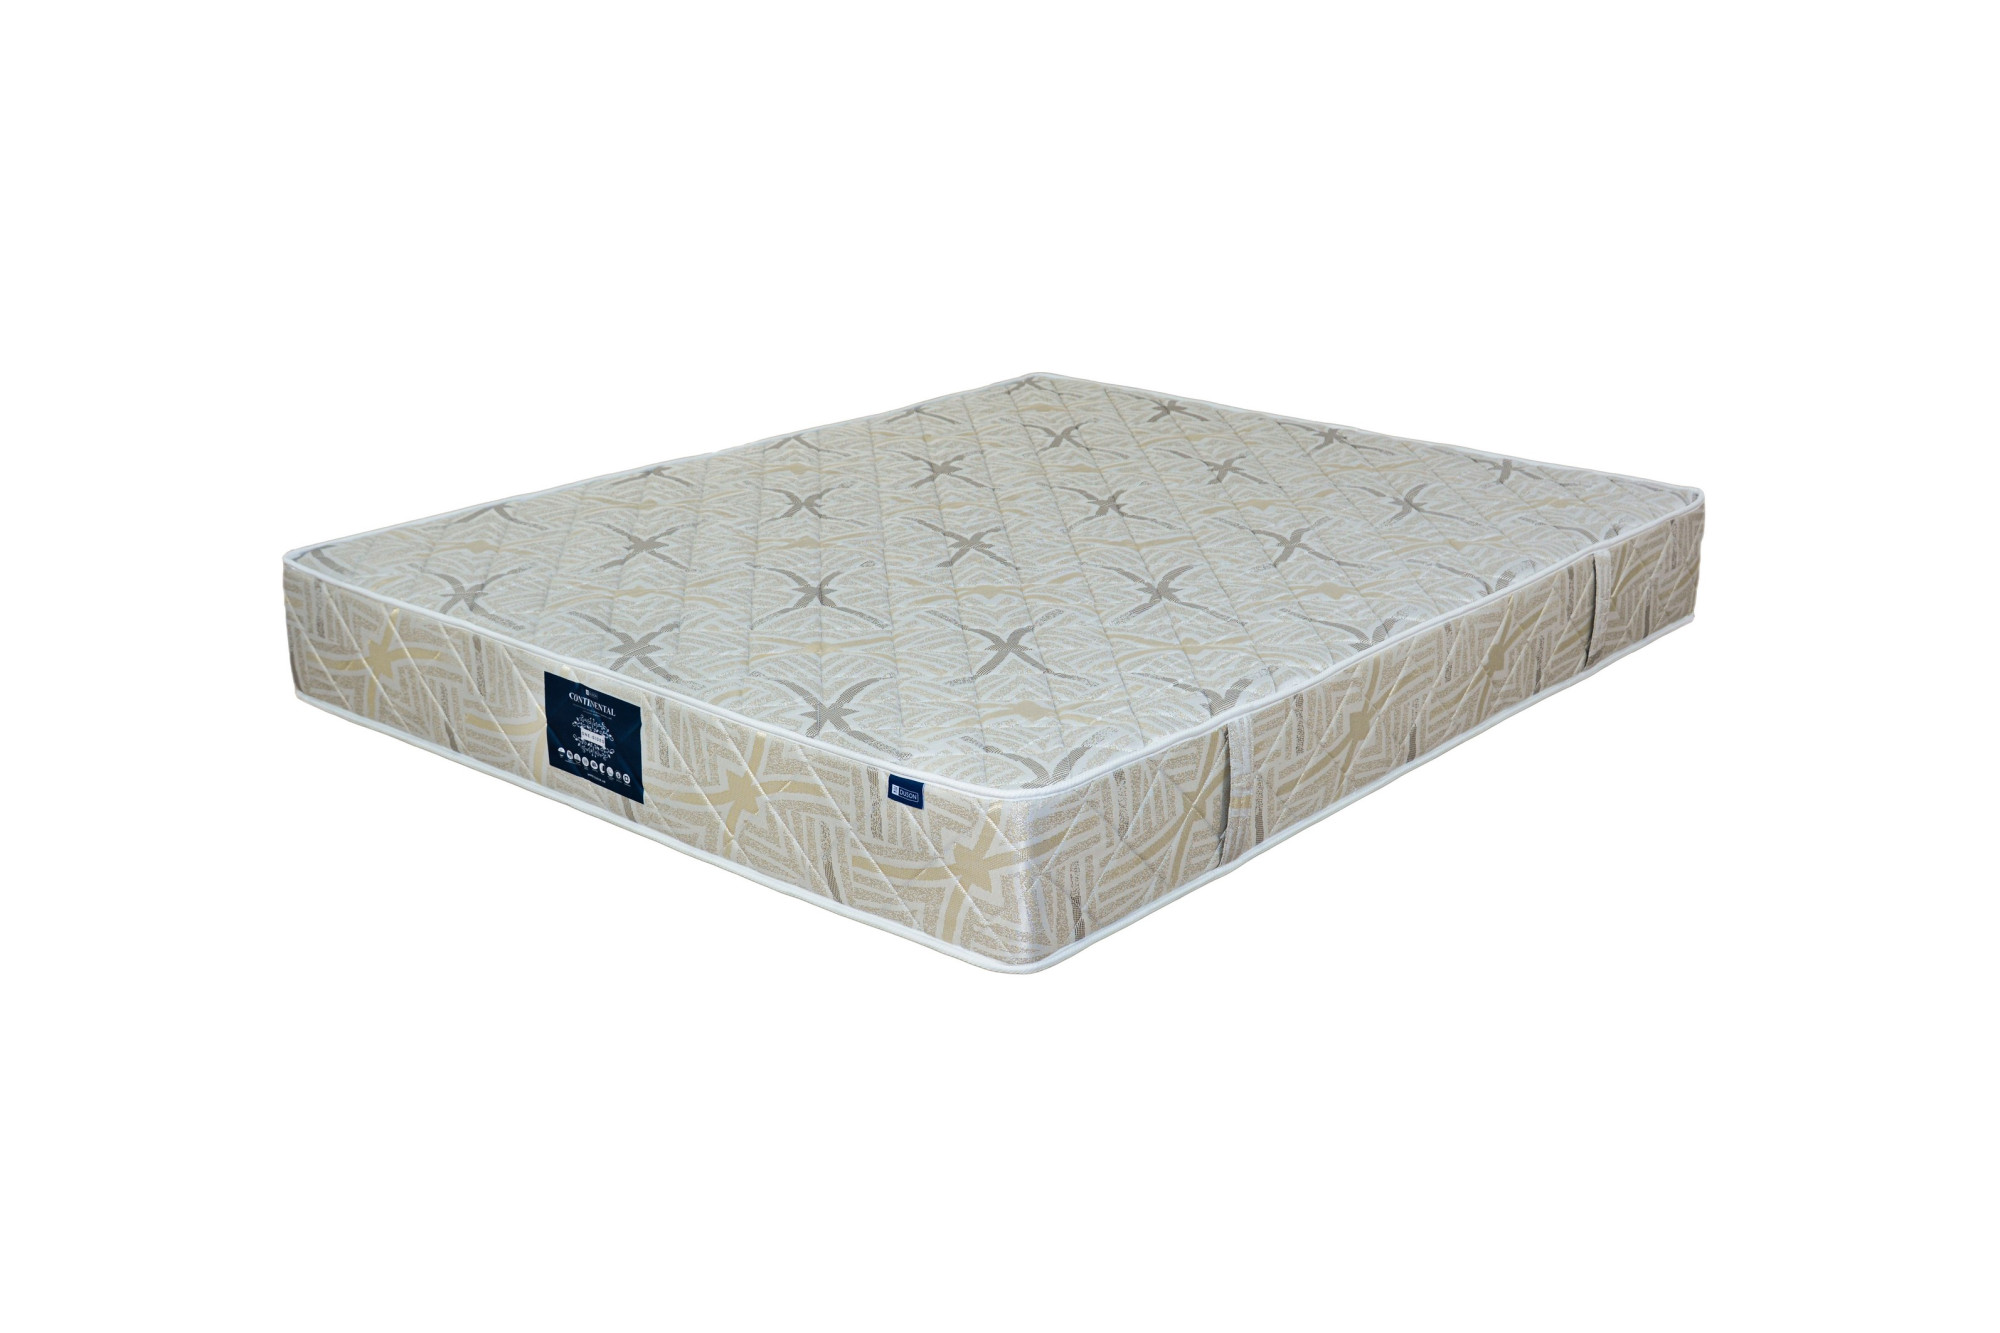 Orthopedic mattress Continental One-sided 70x190 soft, 25cm